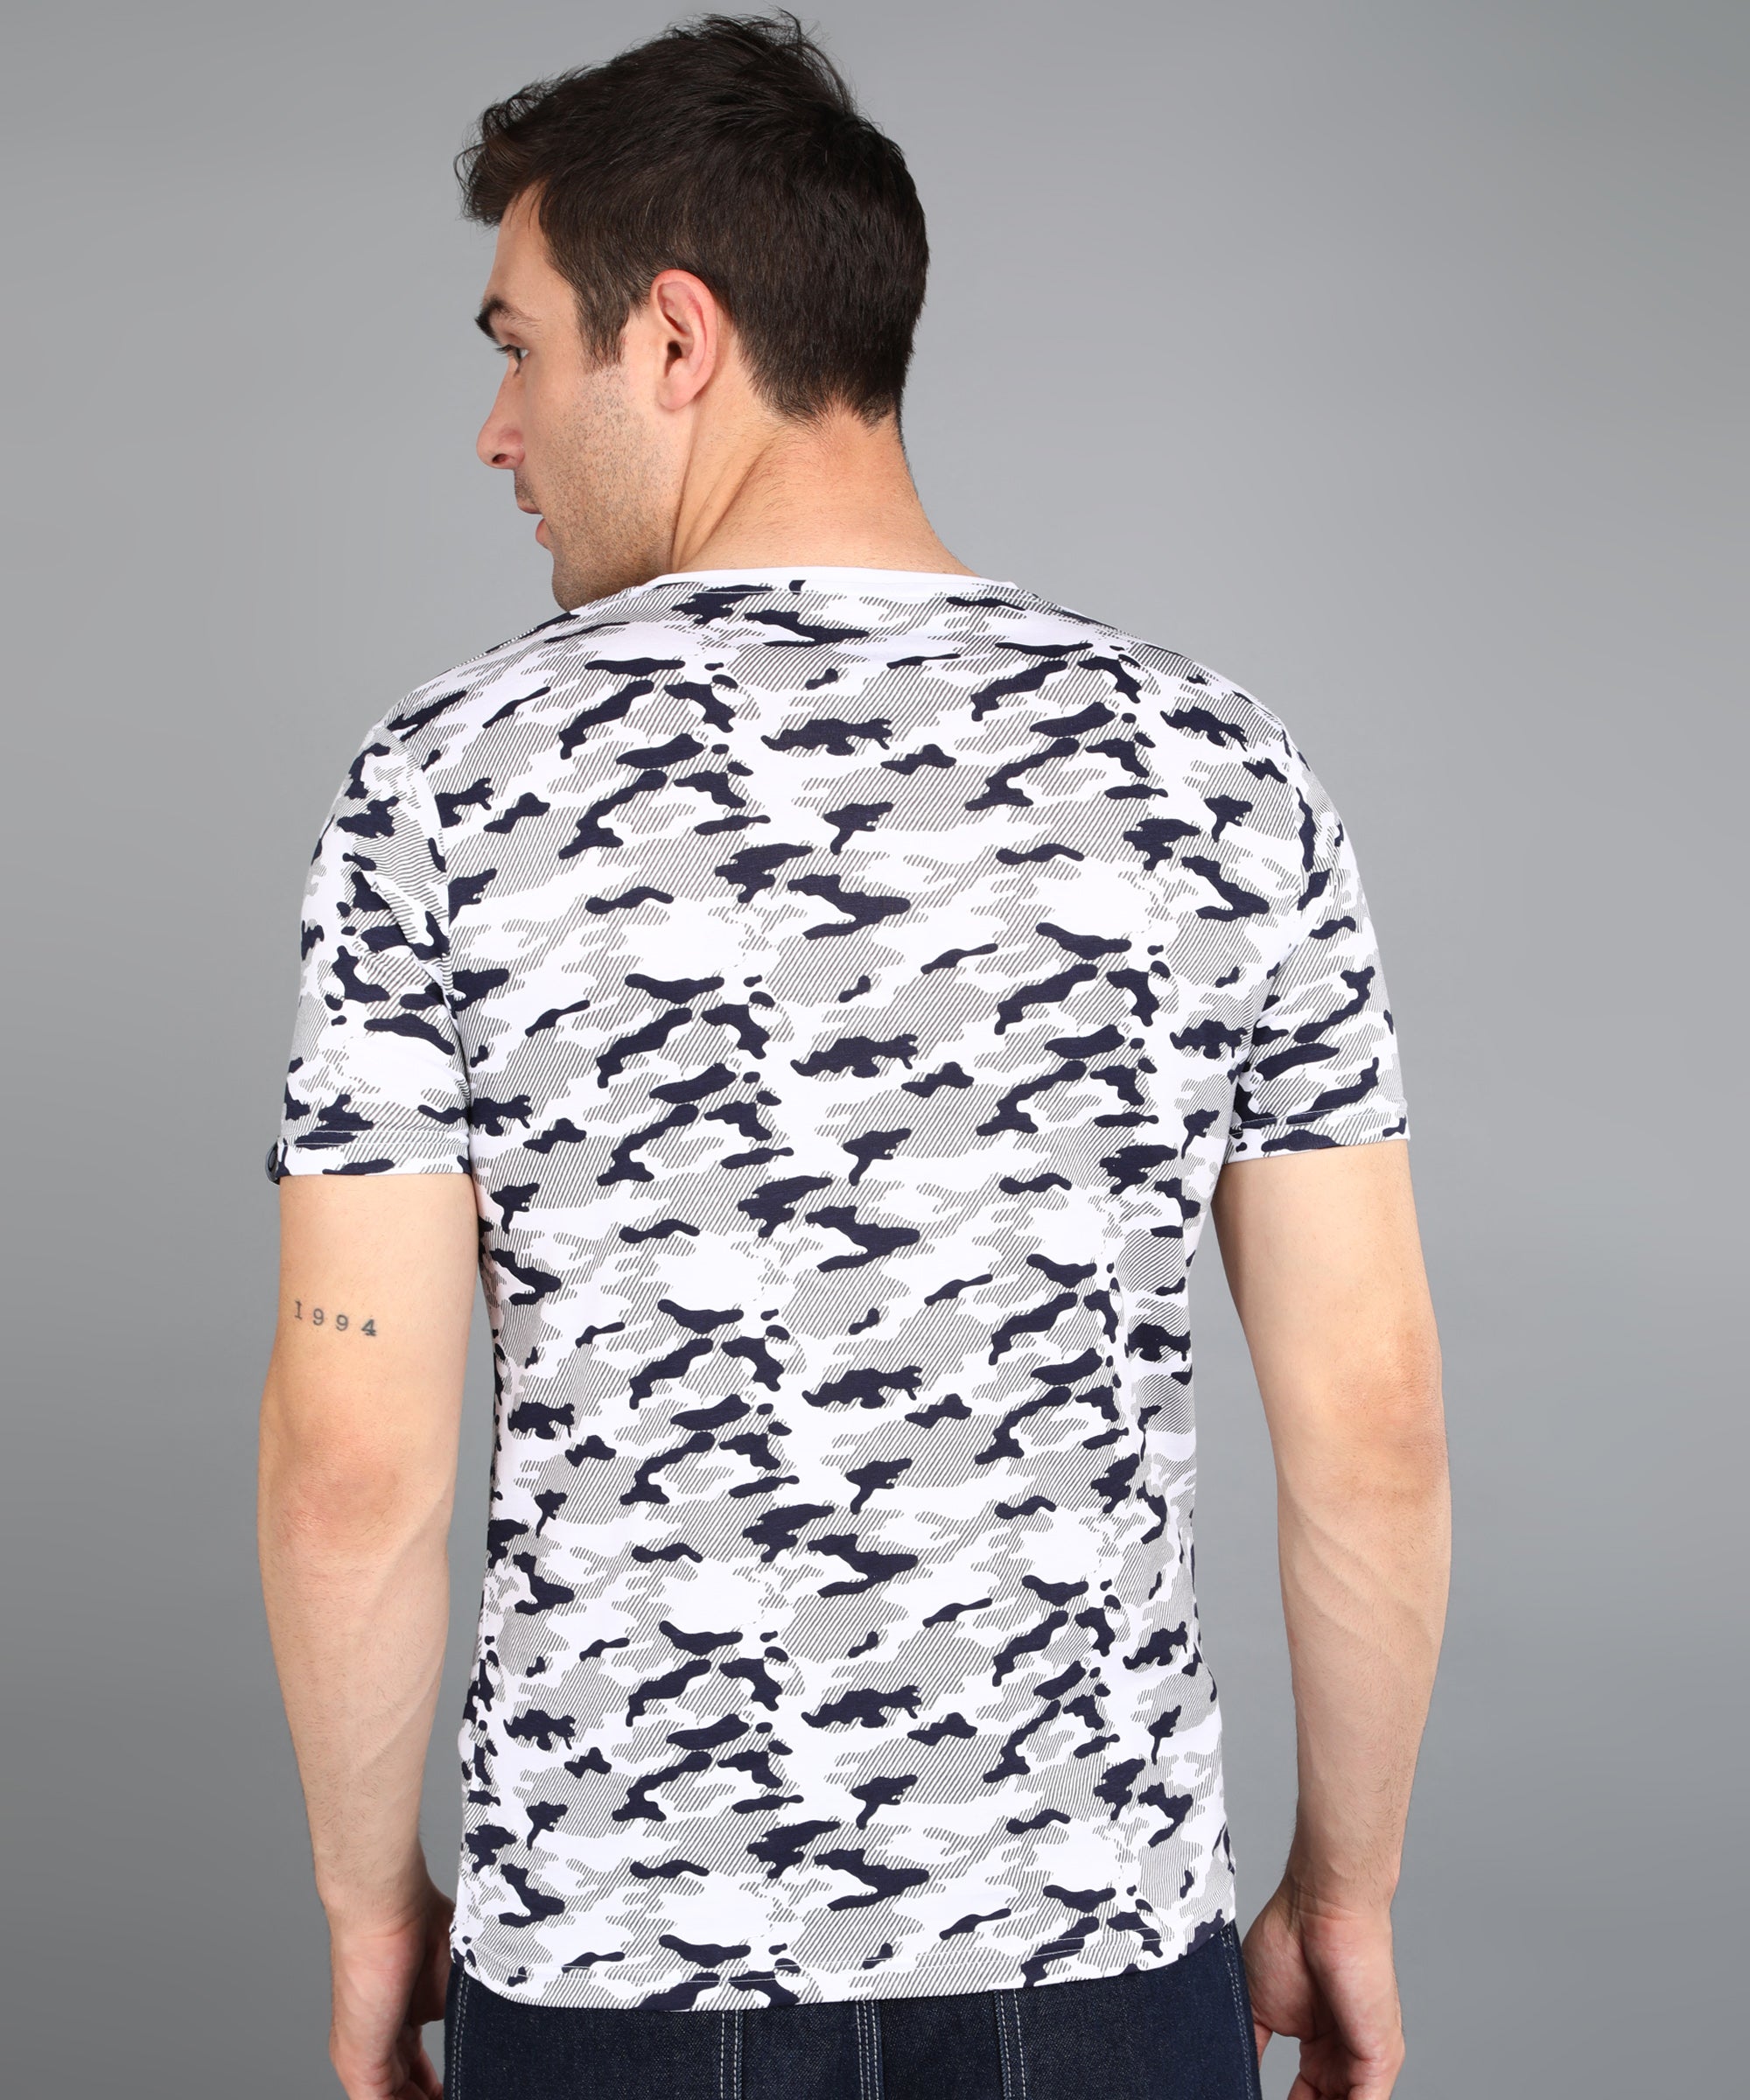 Urbano Fashion Men's White Military Camouflage Printed Slim Fit Half Sleeve Cotton T-Shirt